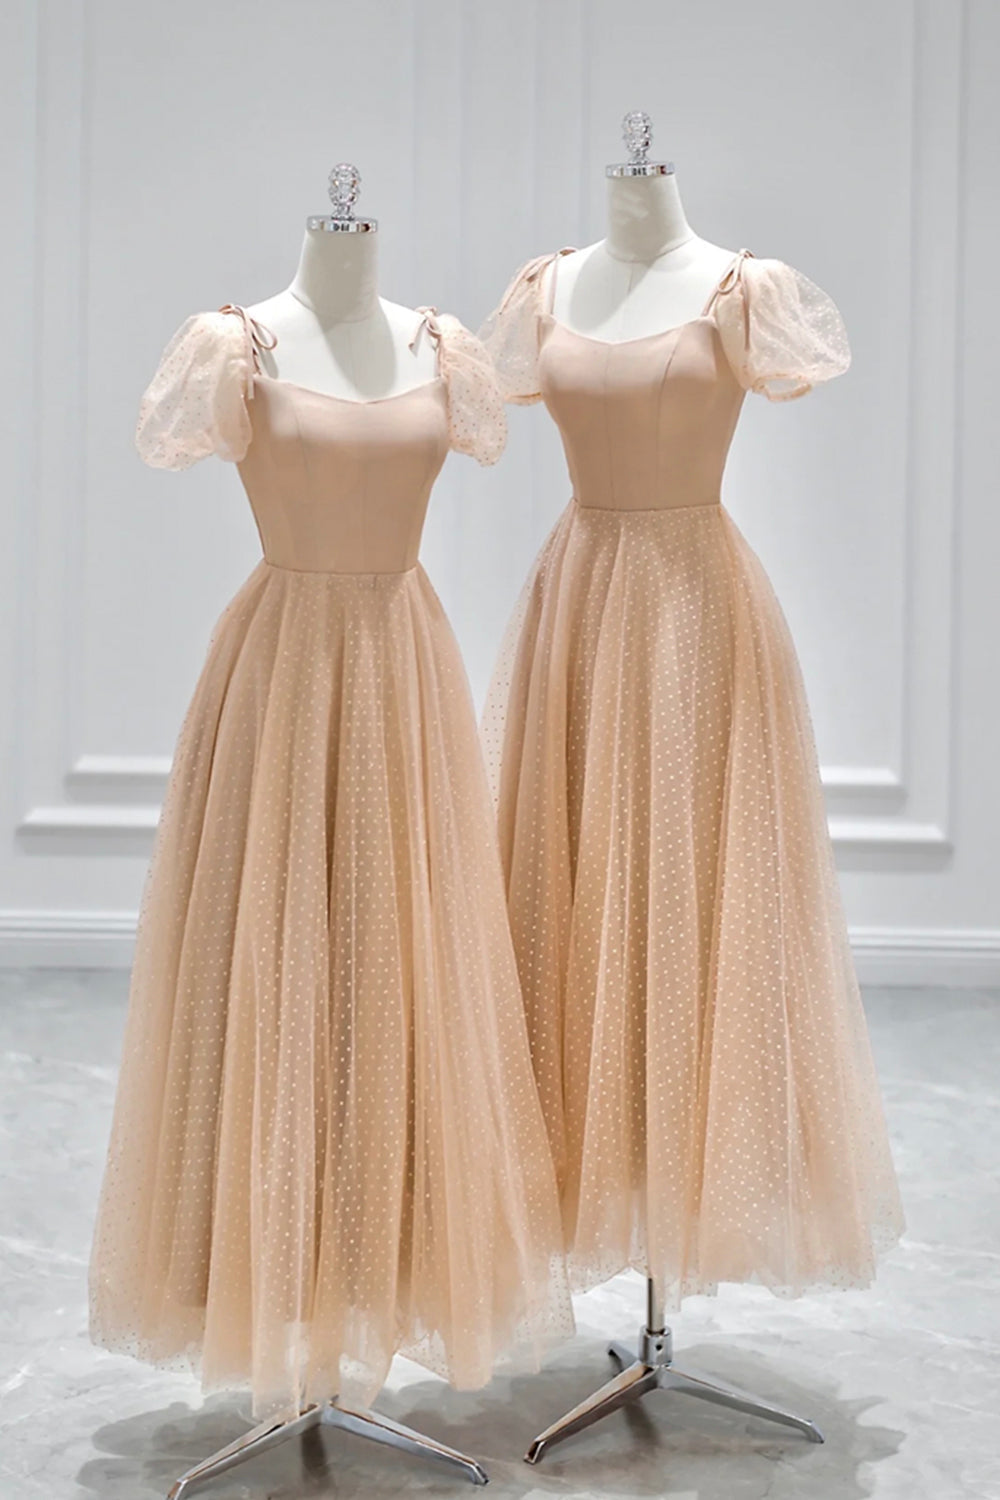 Bridesmaid Dress Style Long, Champagne Tulle Tea Length Prom Dress, Cute Short Sleeve Evening Dress